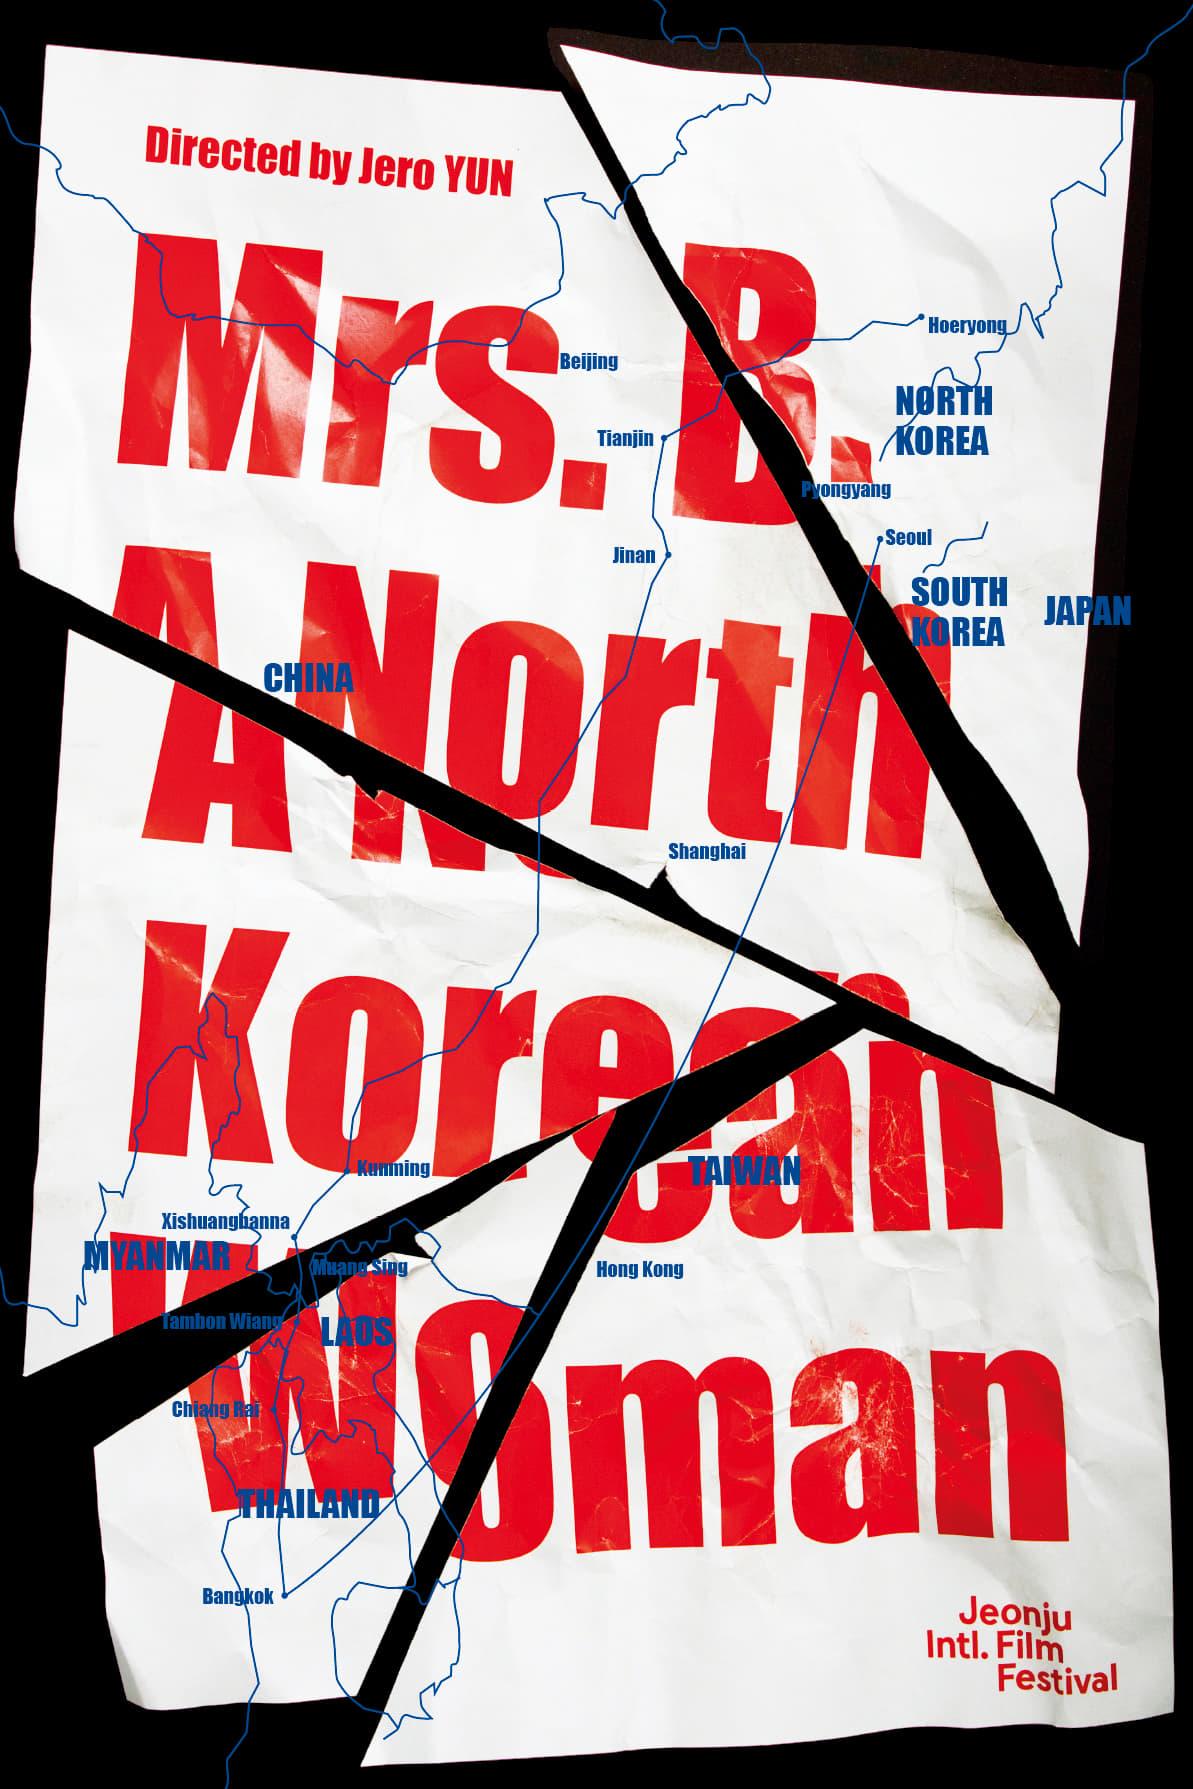 Mrs. B., a North Korean Woman poster